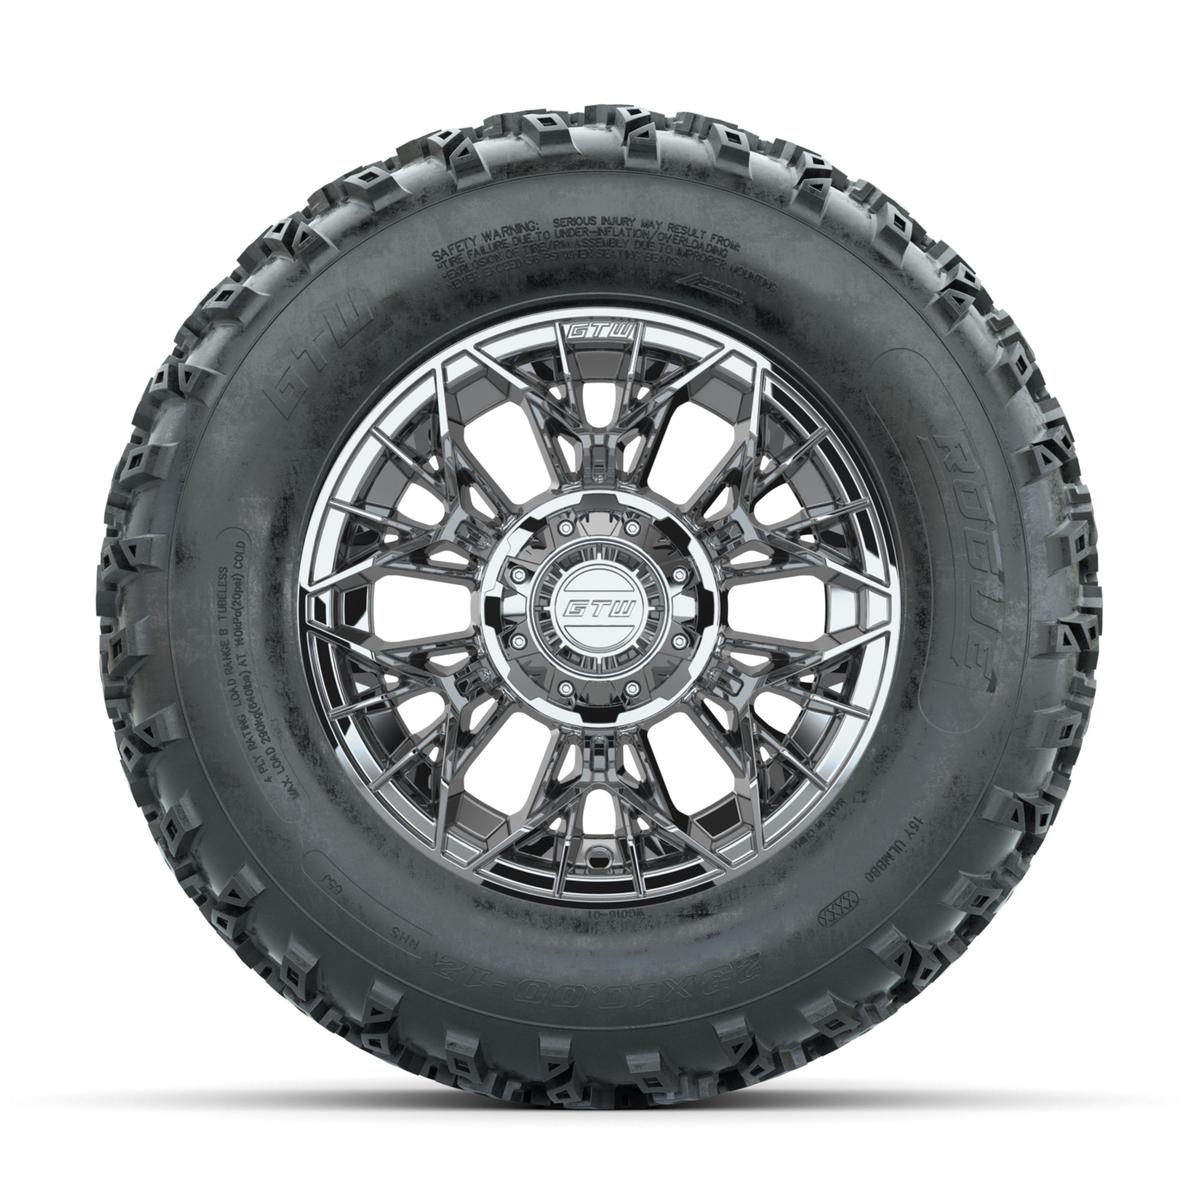 GTW Stellar Chrome 12 in Wheels with 23x10.00-12 Rogue All Terrain Tires – Full Set